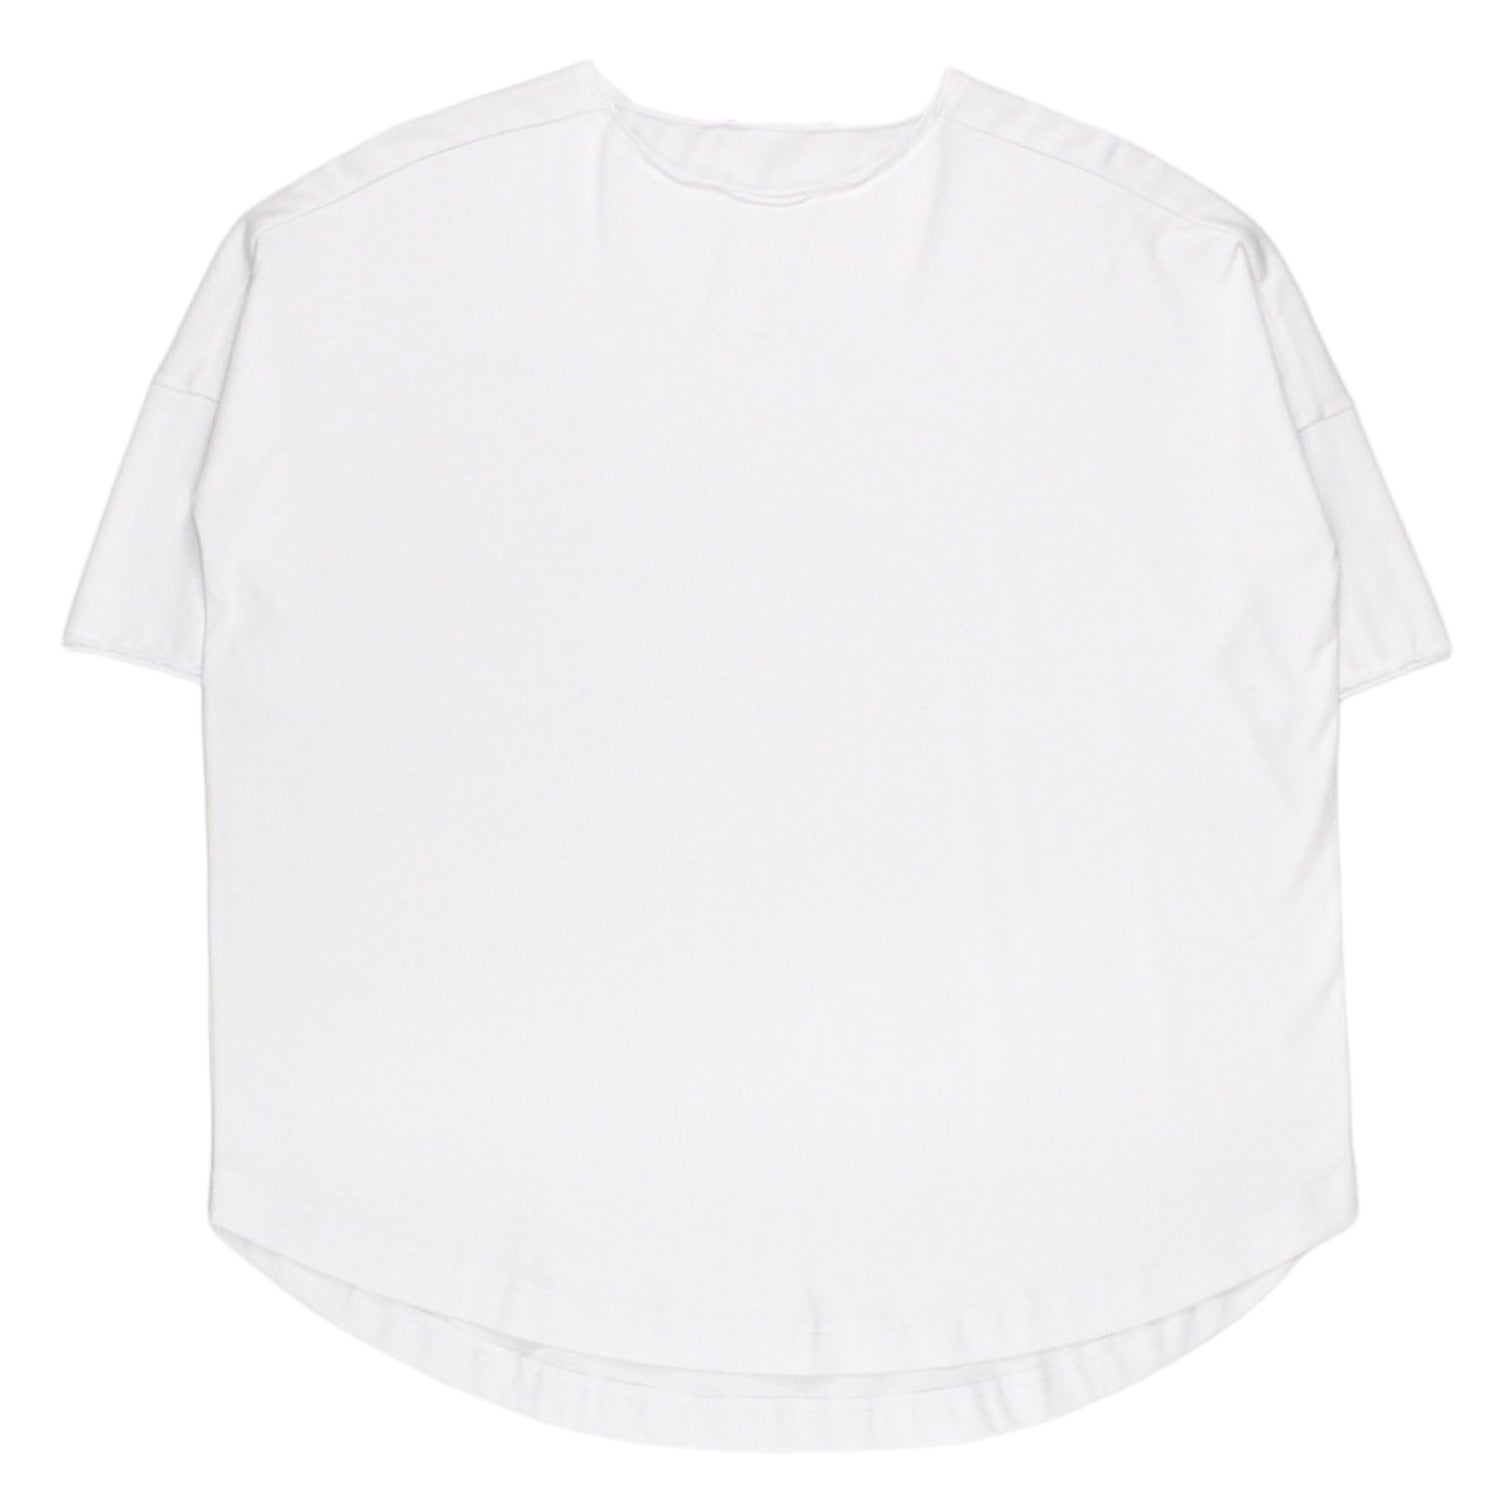 NRBY White Sweatshirt Style Top